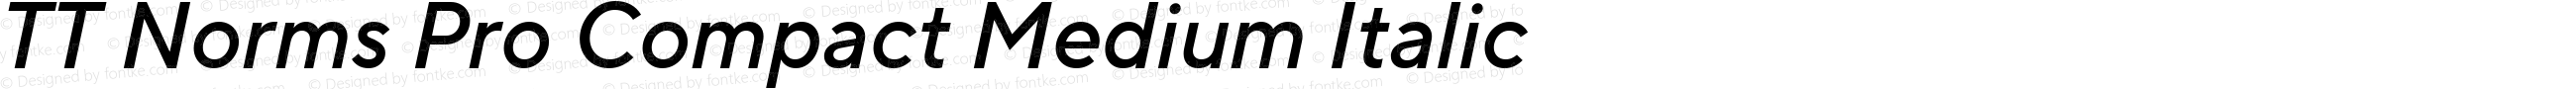 TT Norms Pro Compact Medium Italic